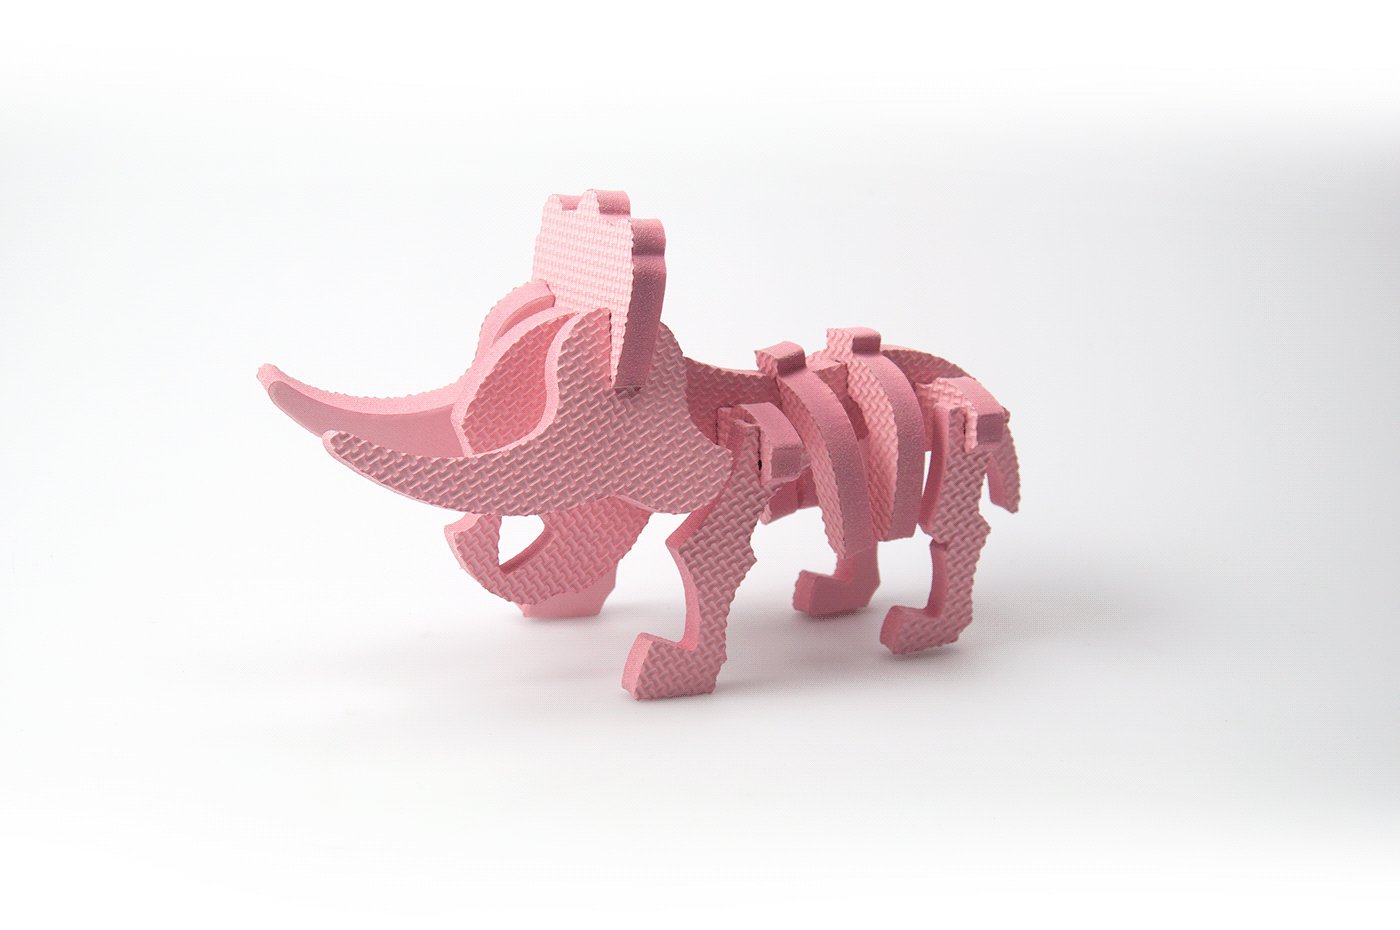 puzzle puzzlemat toy Dinosaur acient creature baby kids triceratops